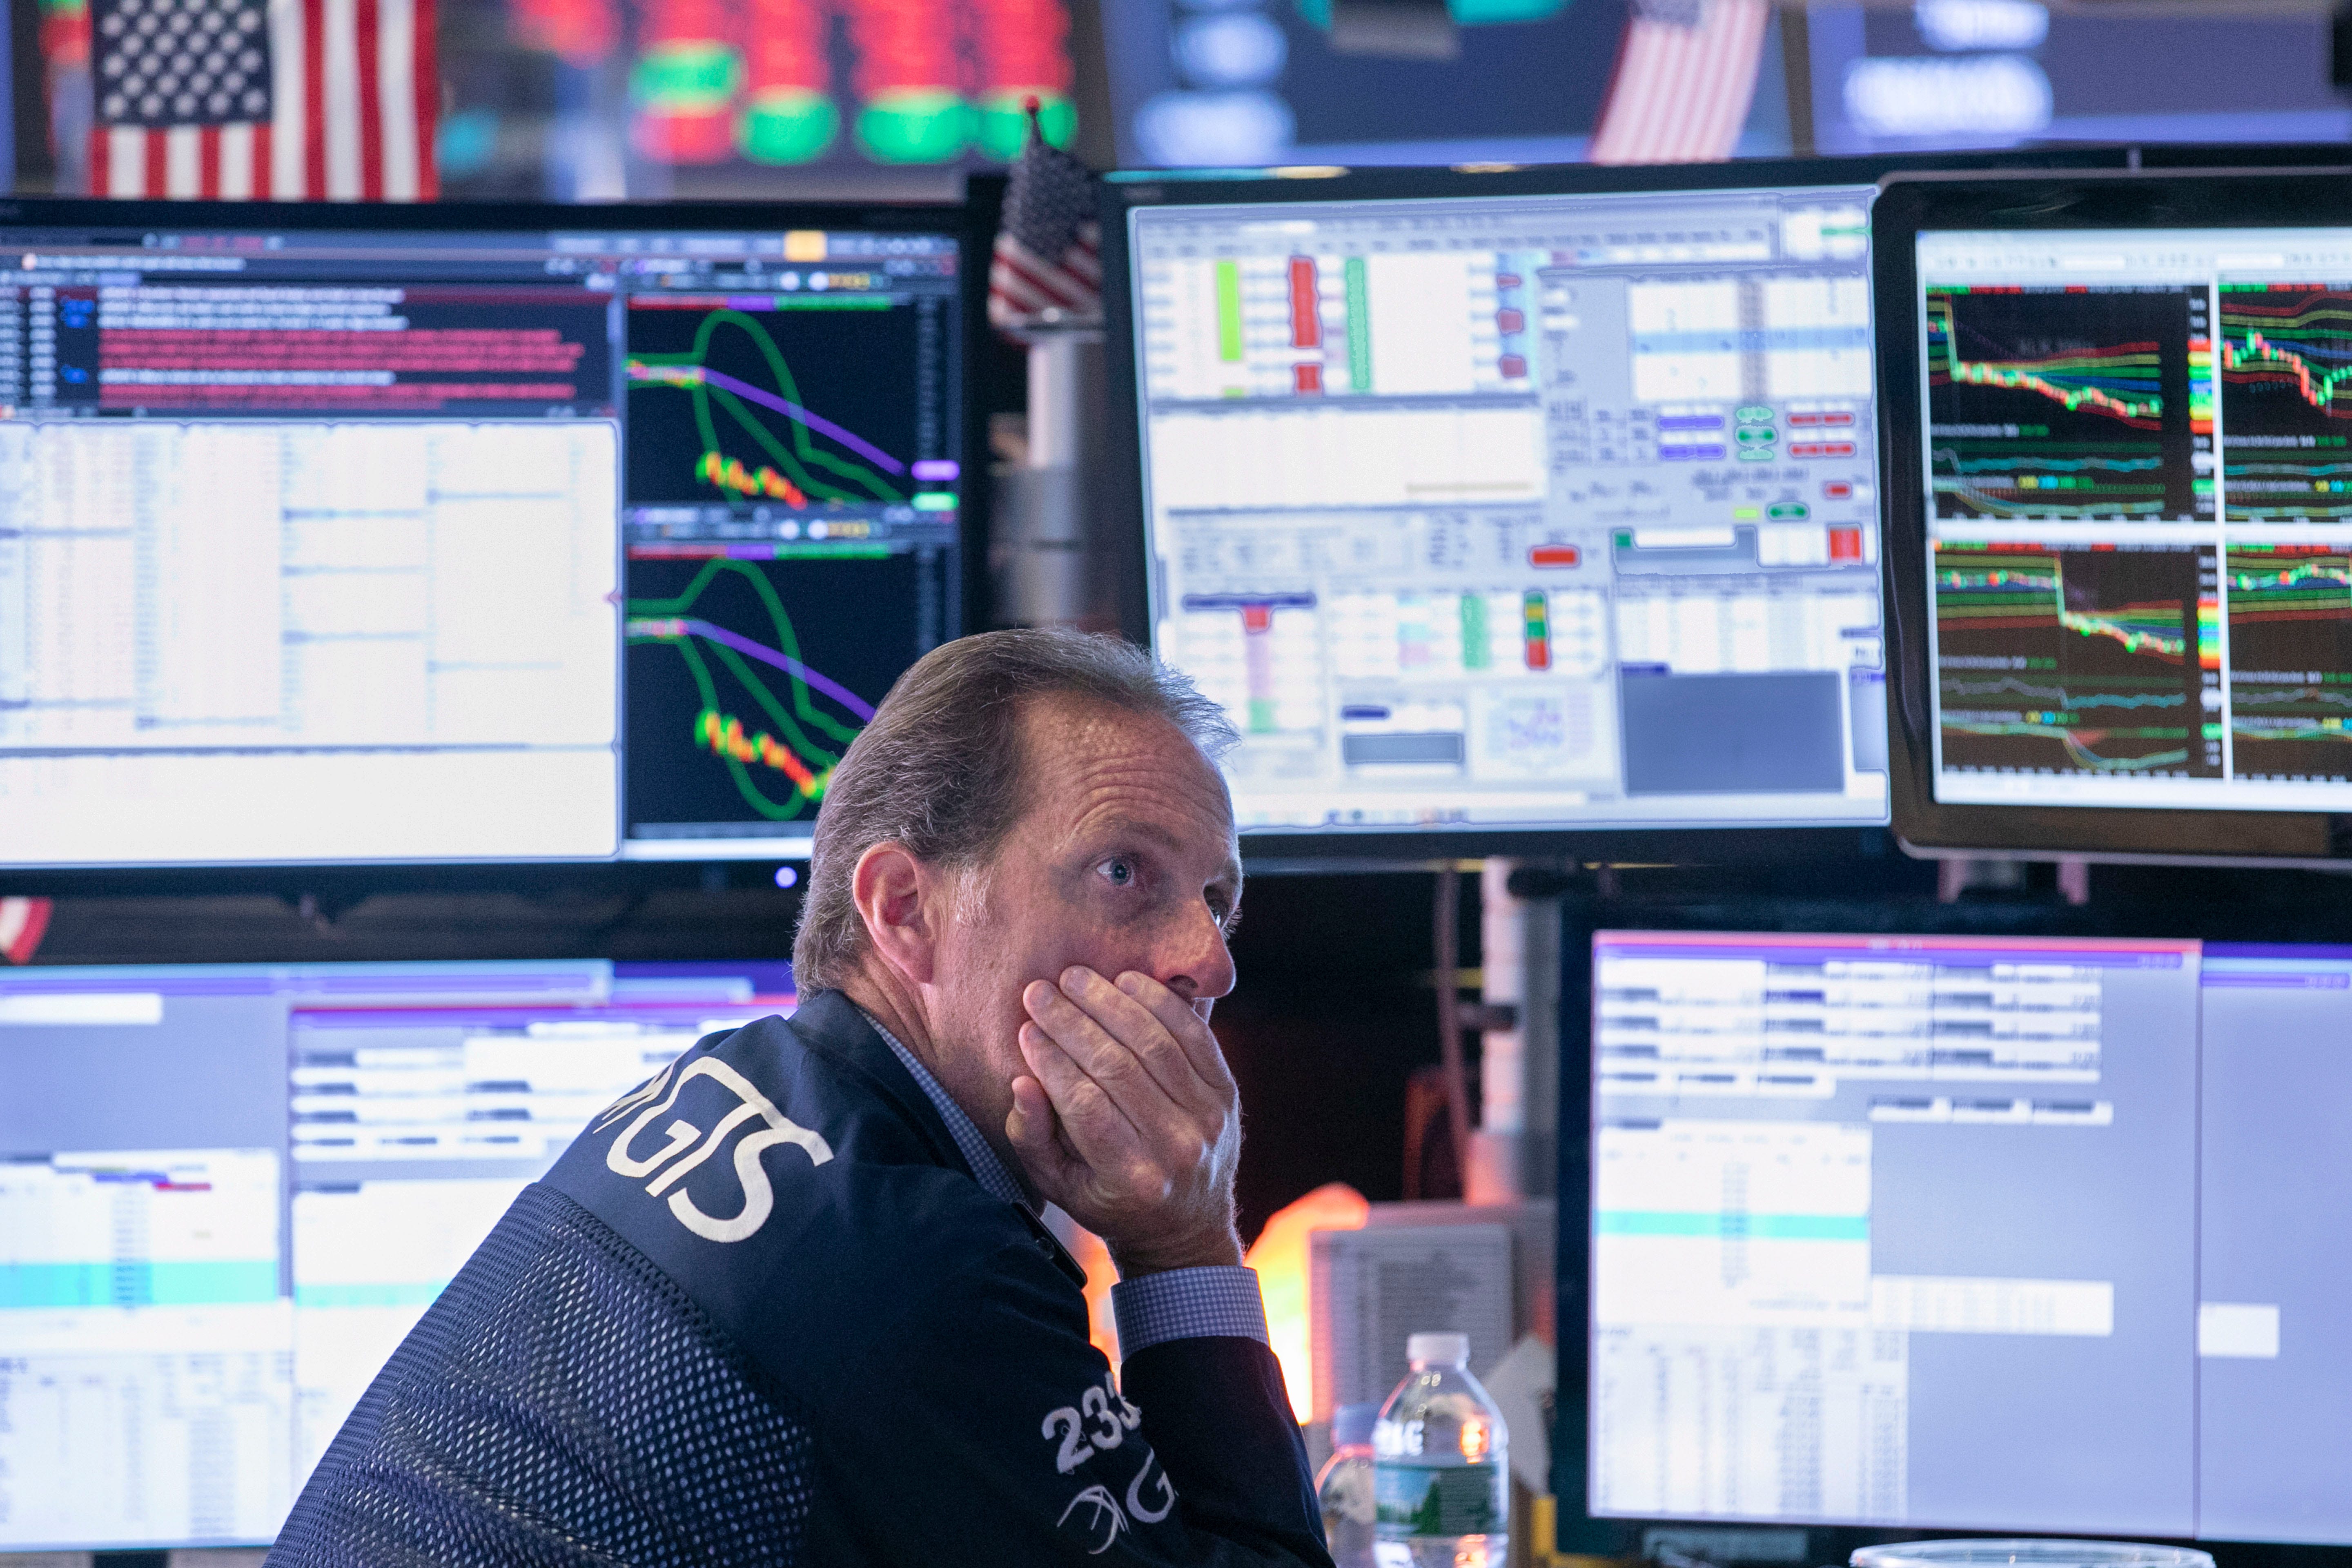 Global stock market, Dow Jones drop amid trade war